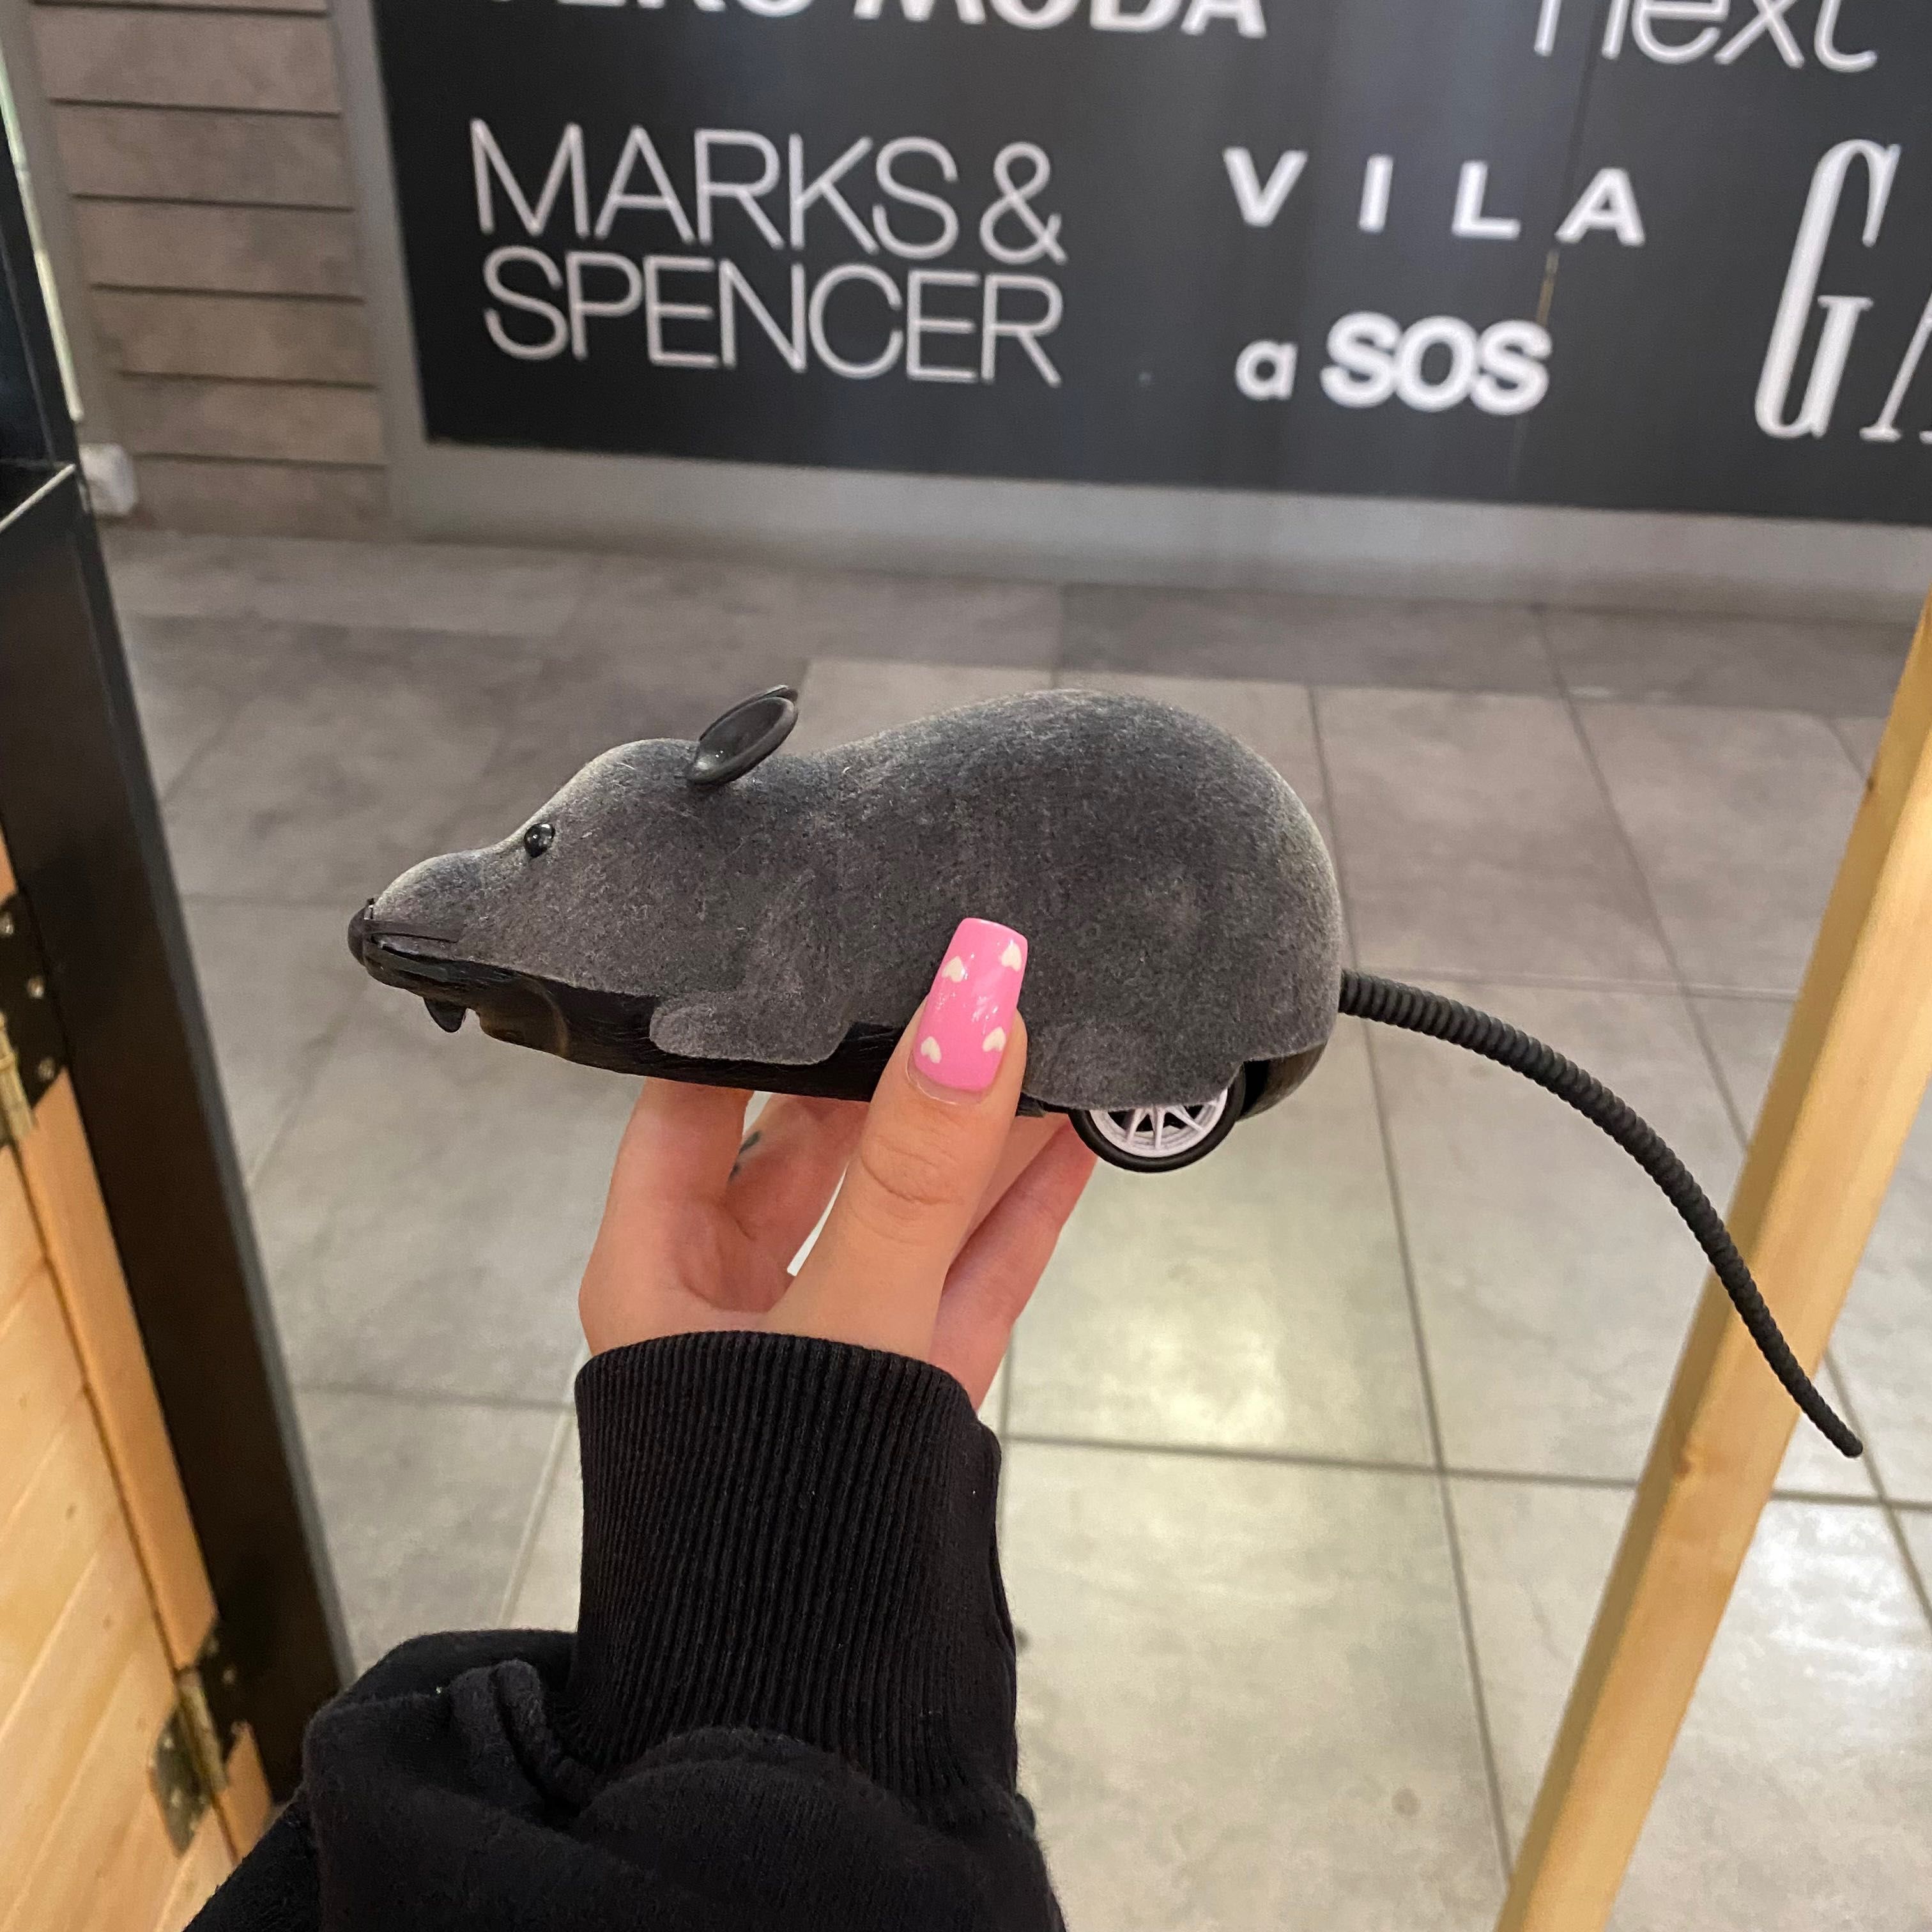 Zabawka dla kota mysz myszka na baterie szara elektryczna